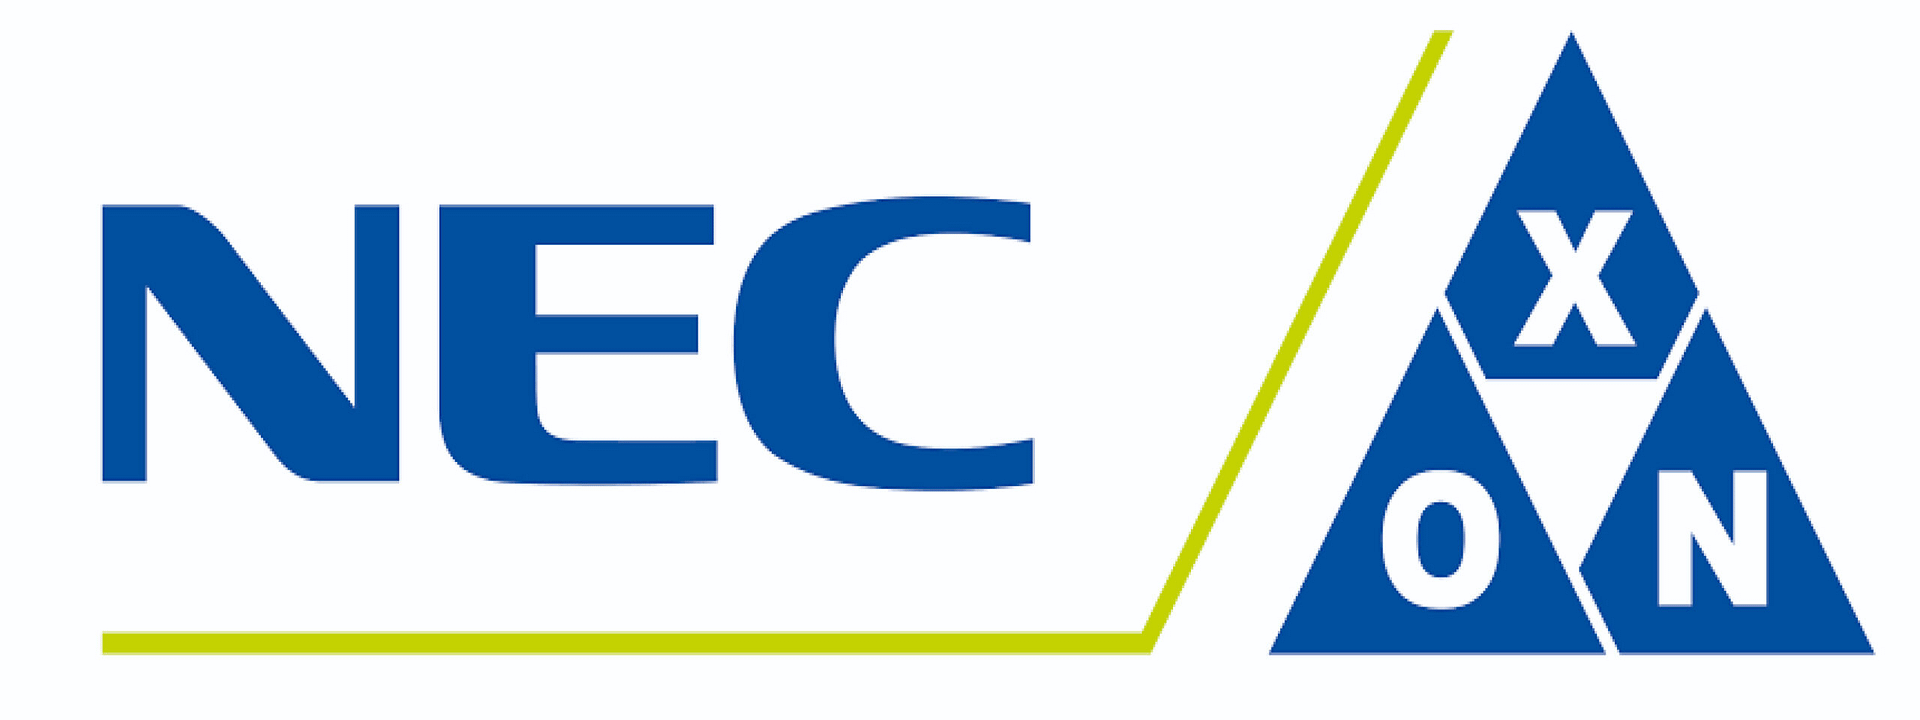 NEC-XON-logo